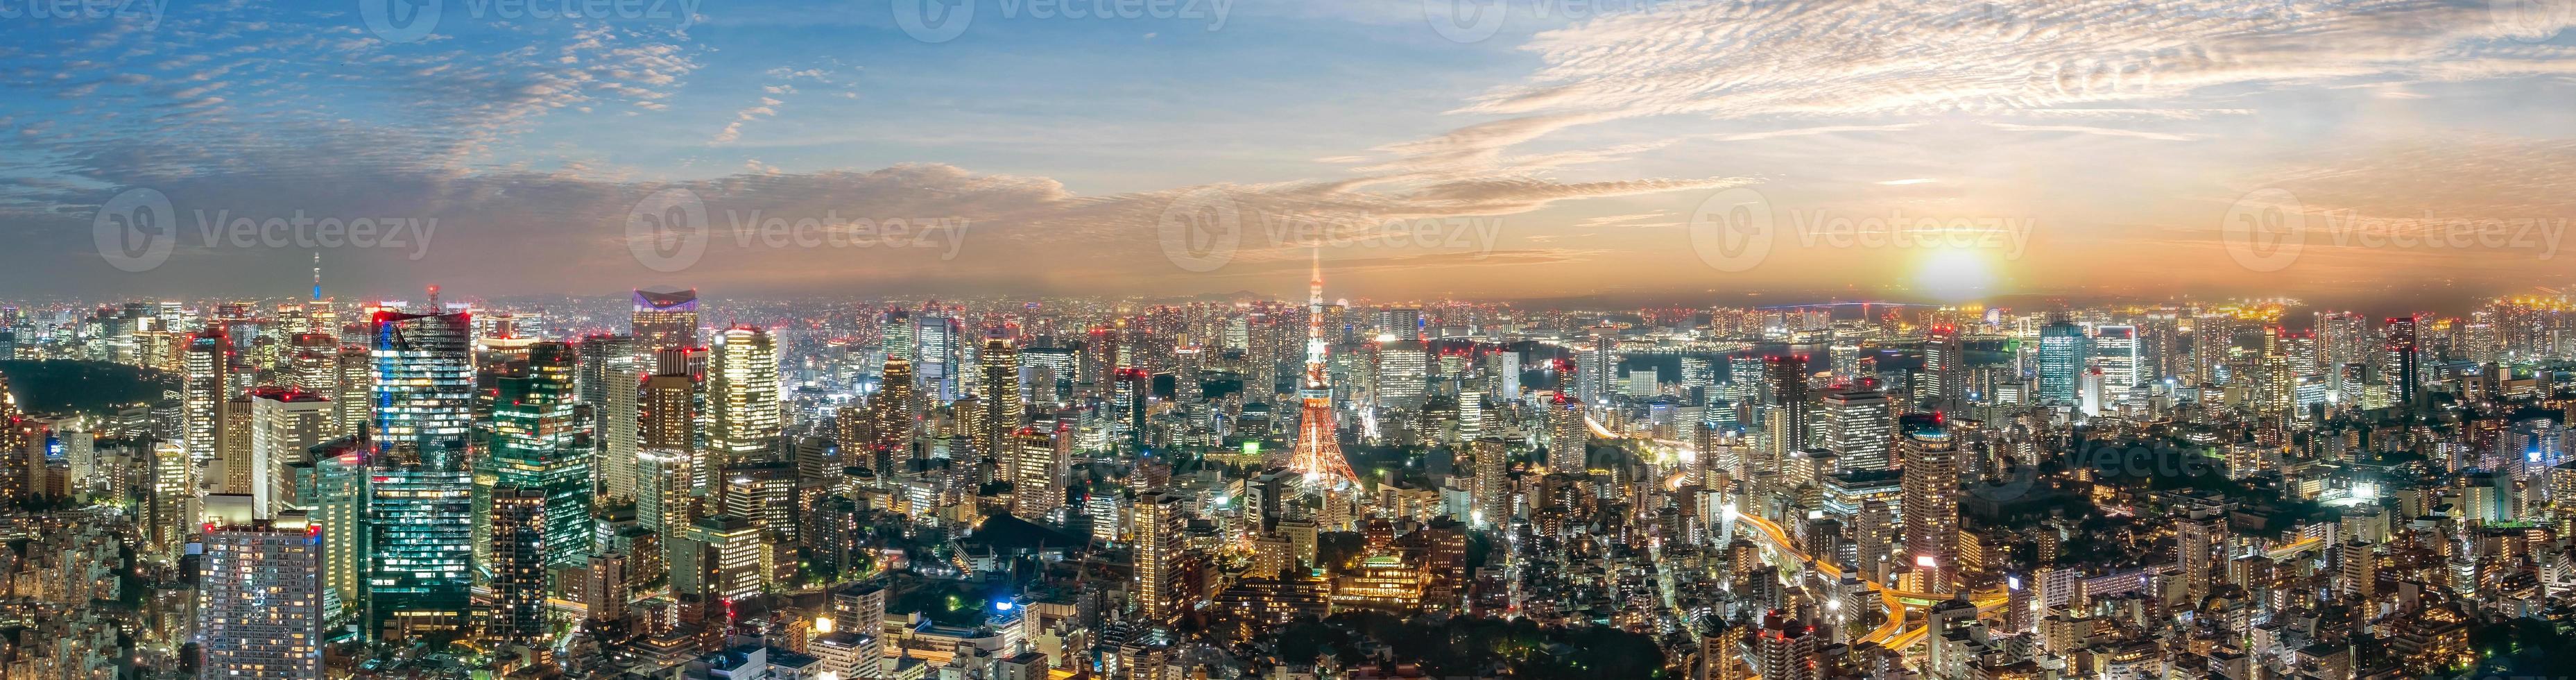 stadsgezicht van tokyo, japan foto